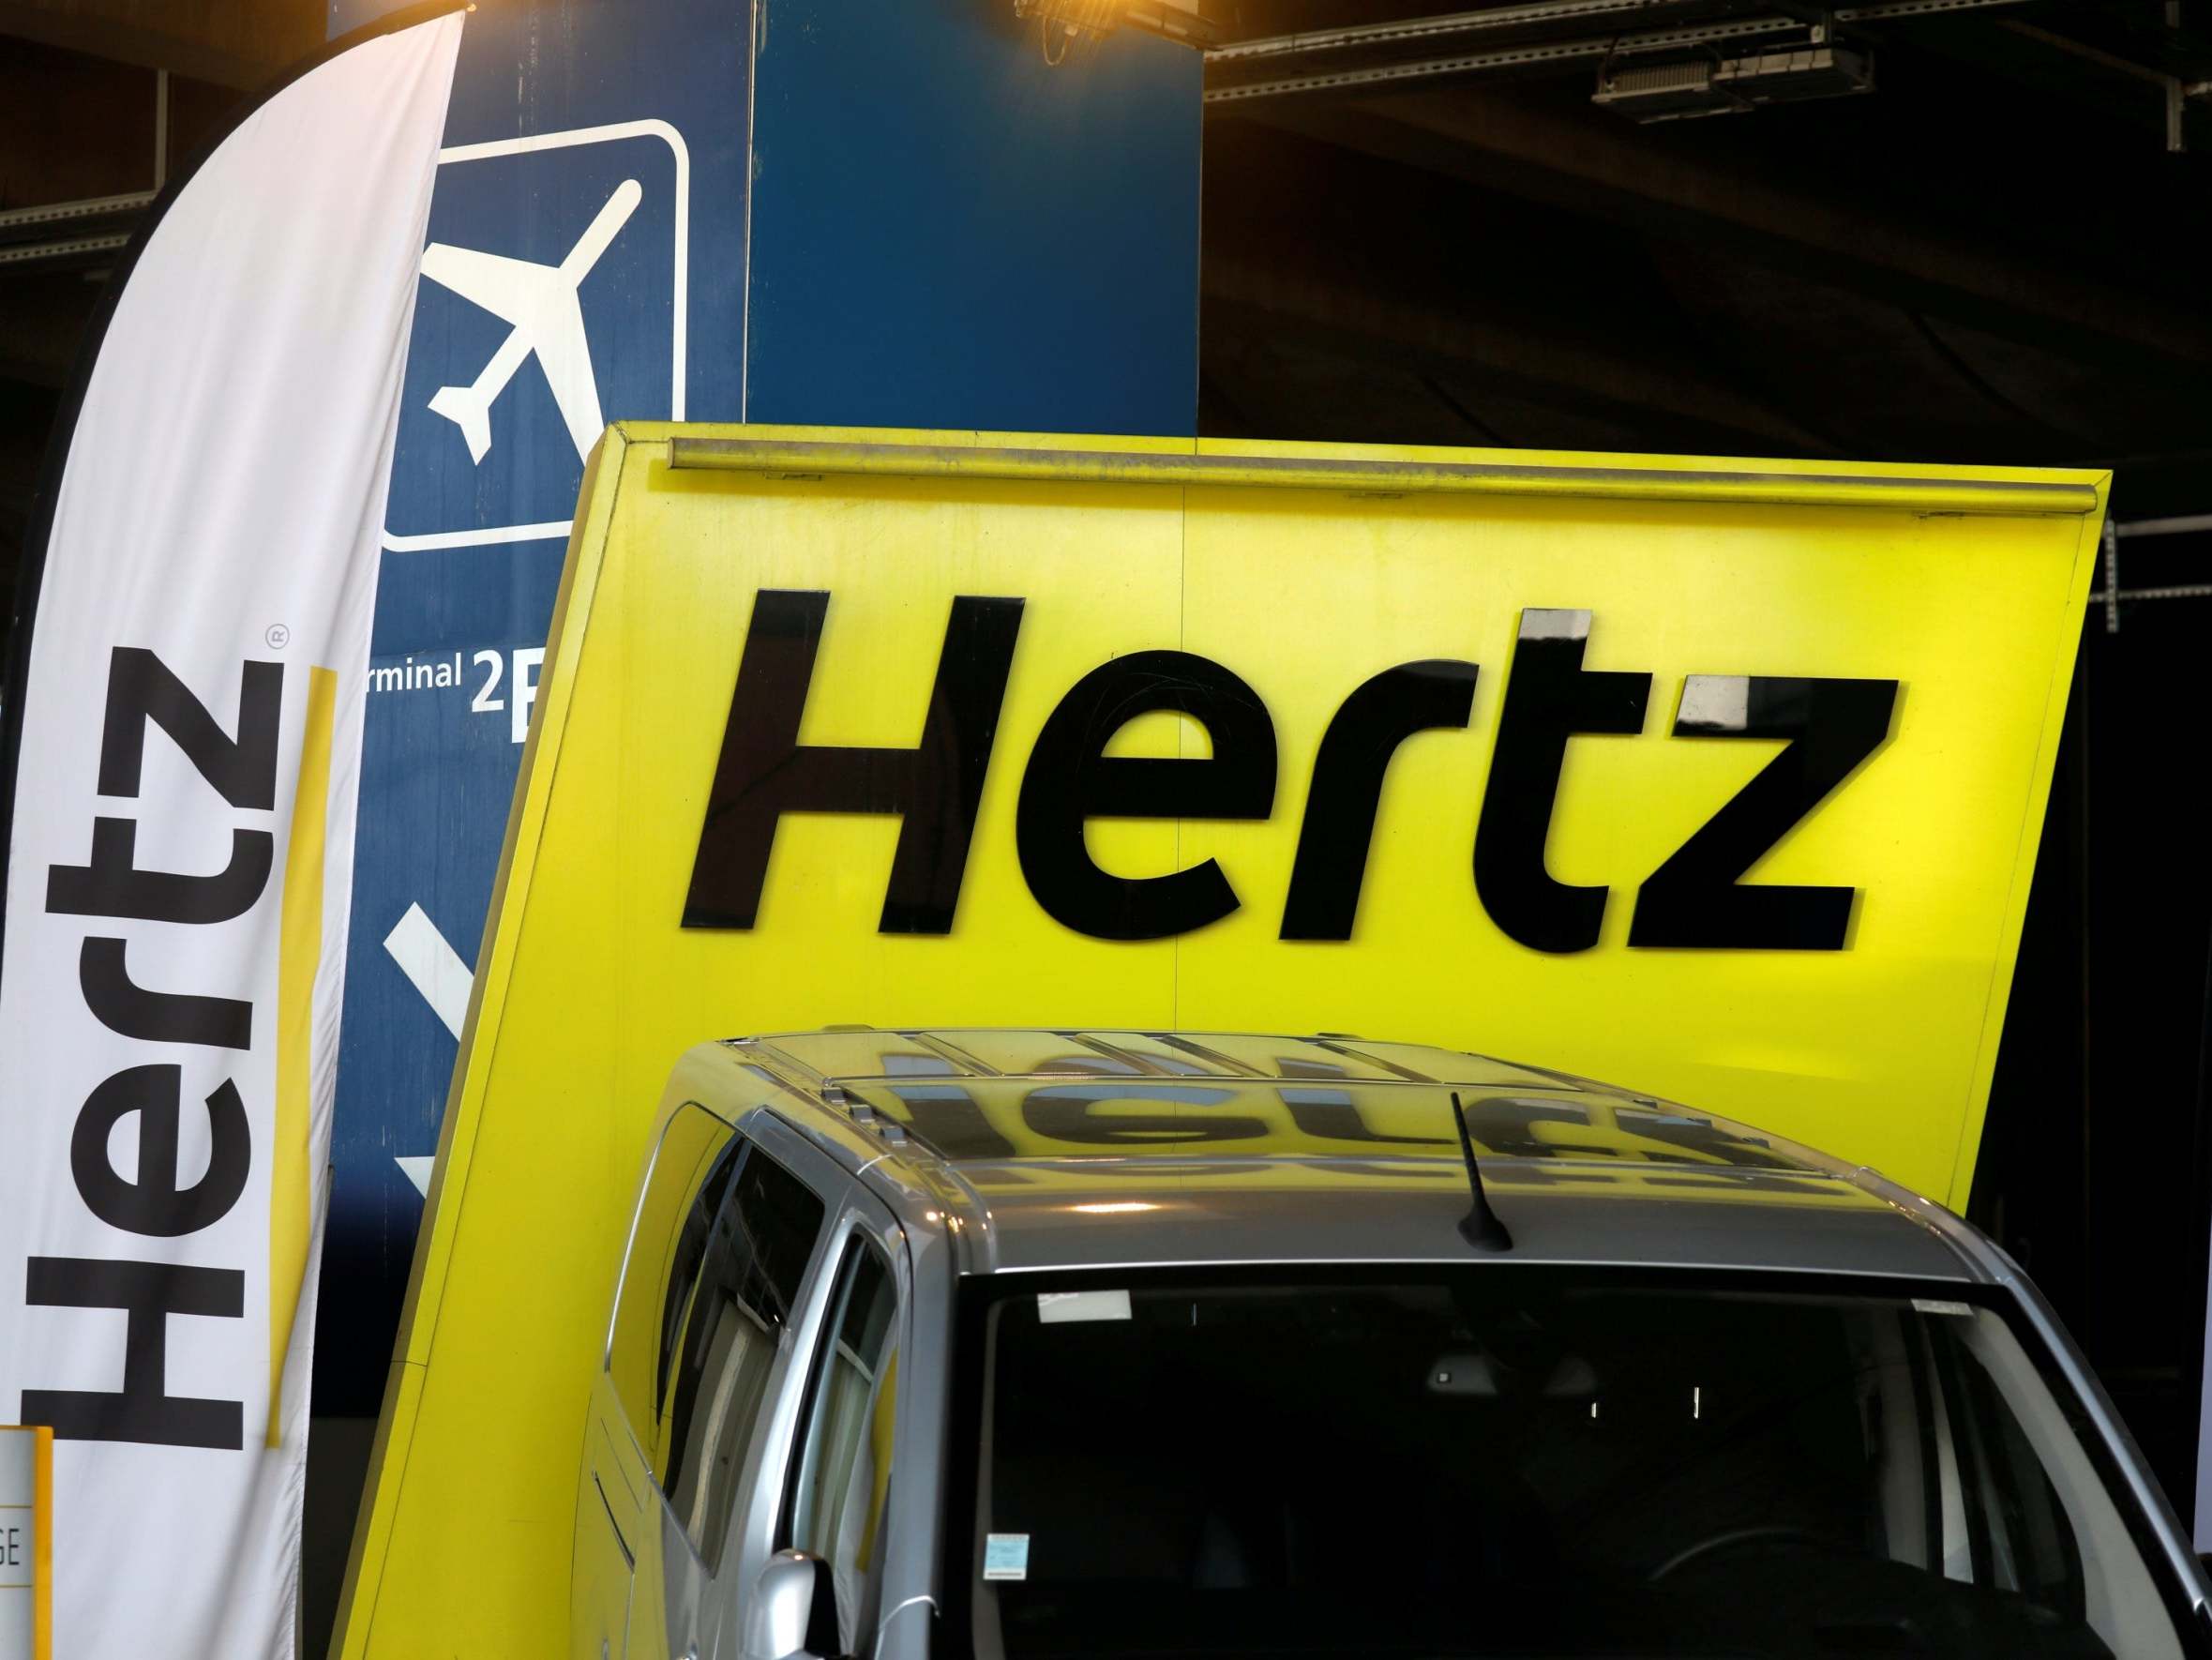 Hertz car hire company files for bankruptcy amid coronavirus pandemic